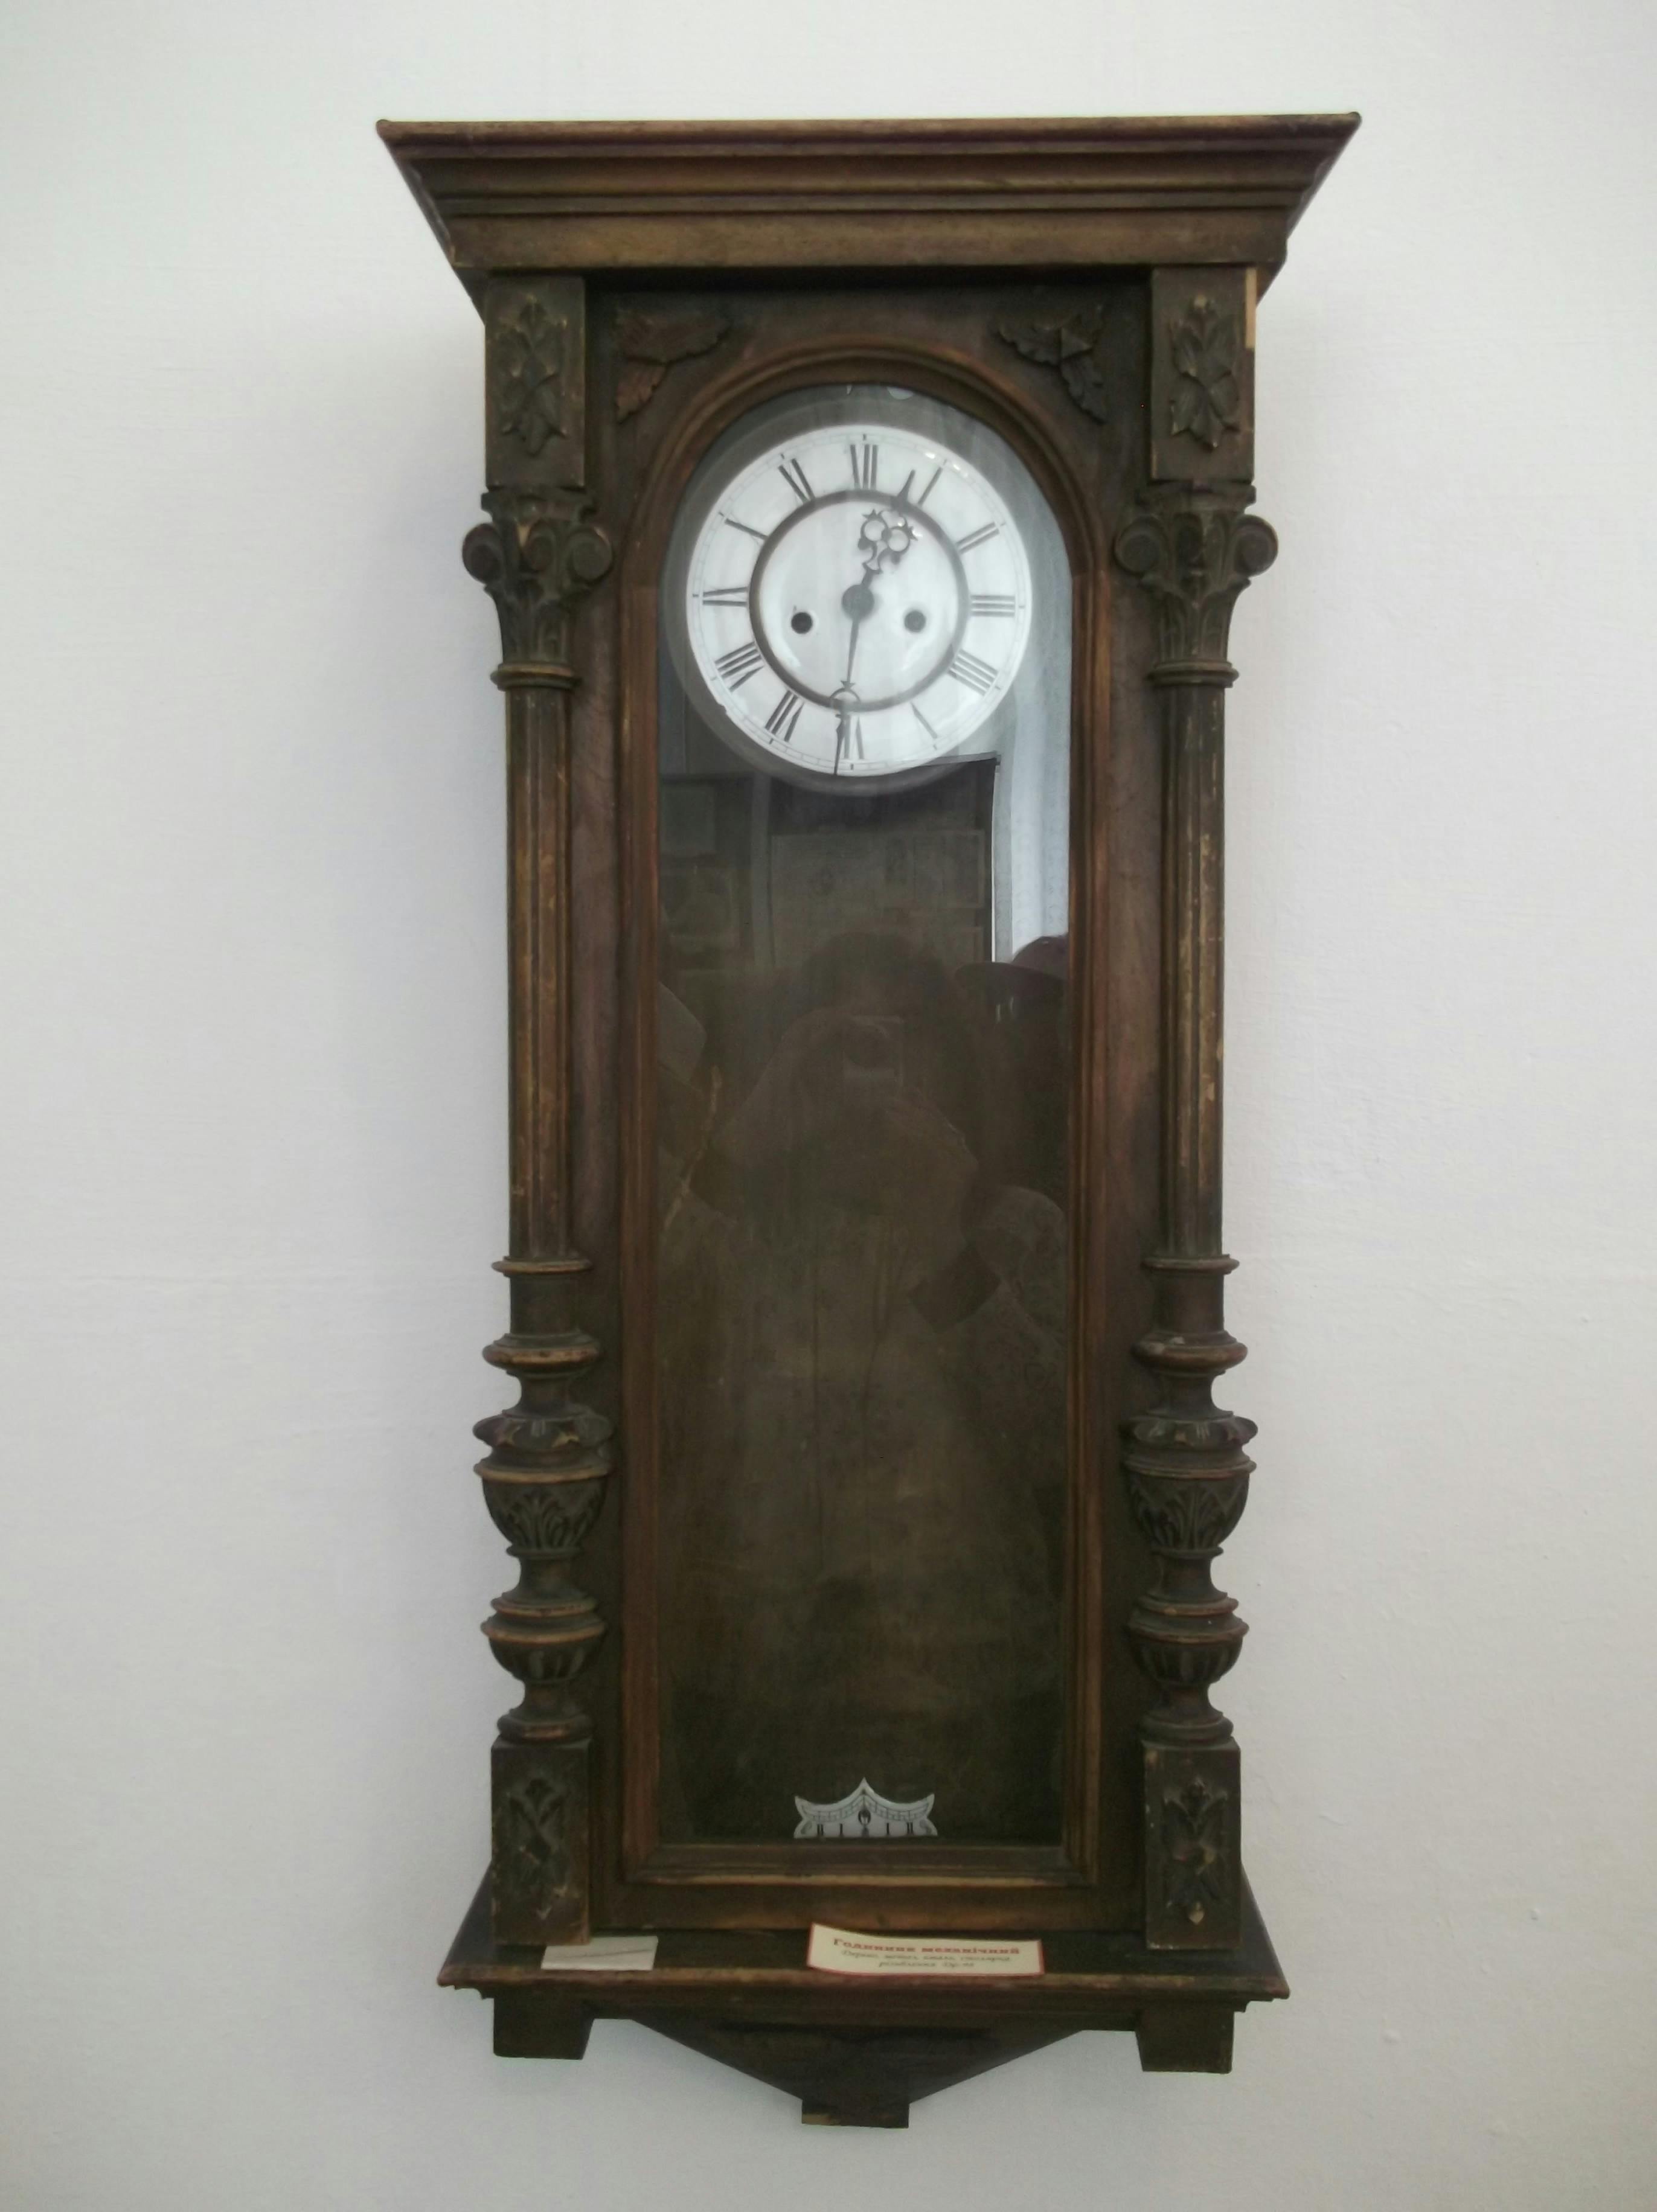 Free stock photo of museum exhibit, old clock